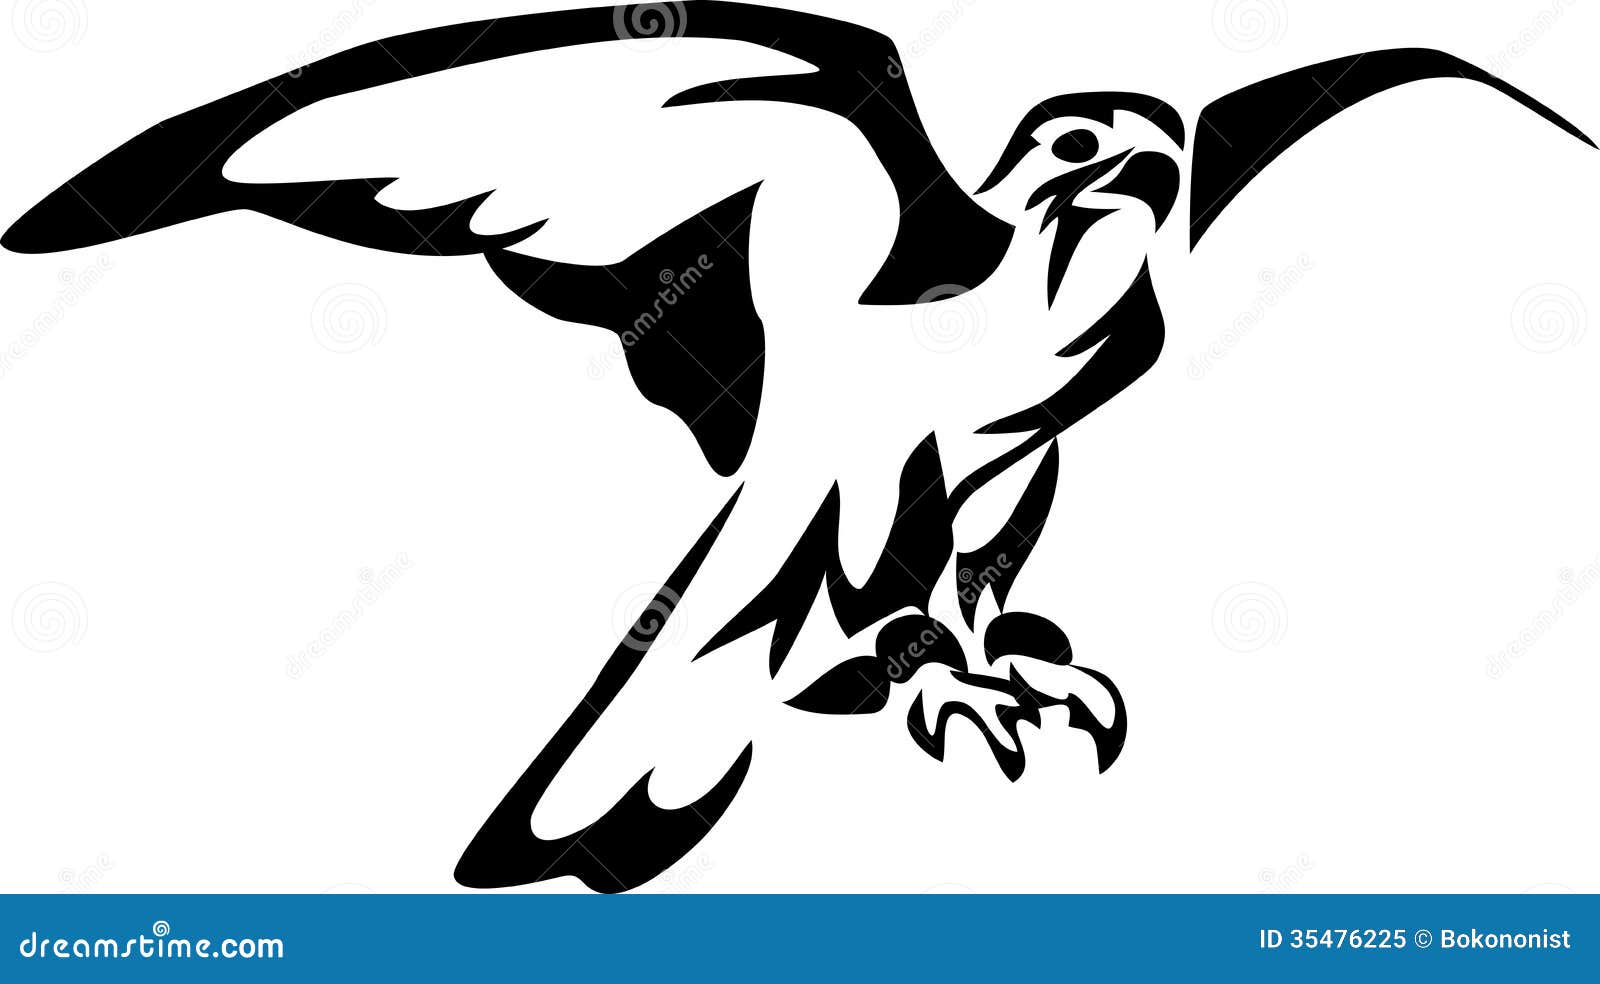 Falcon stock vector. Illustration of 